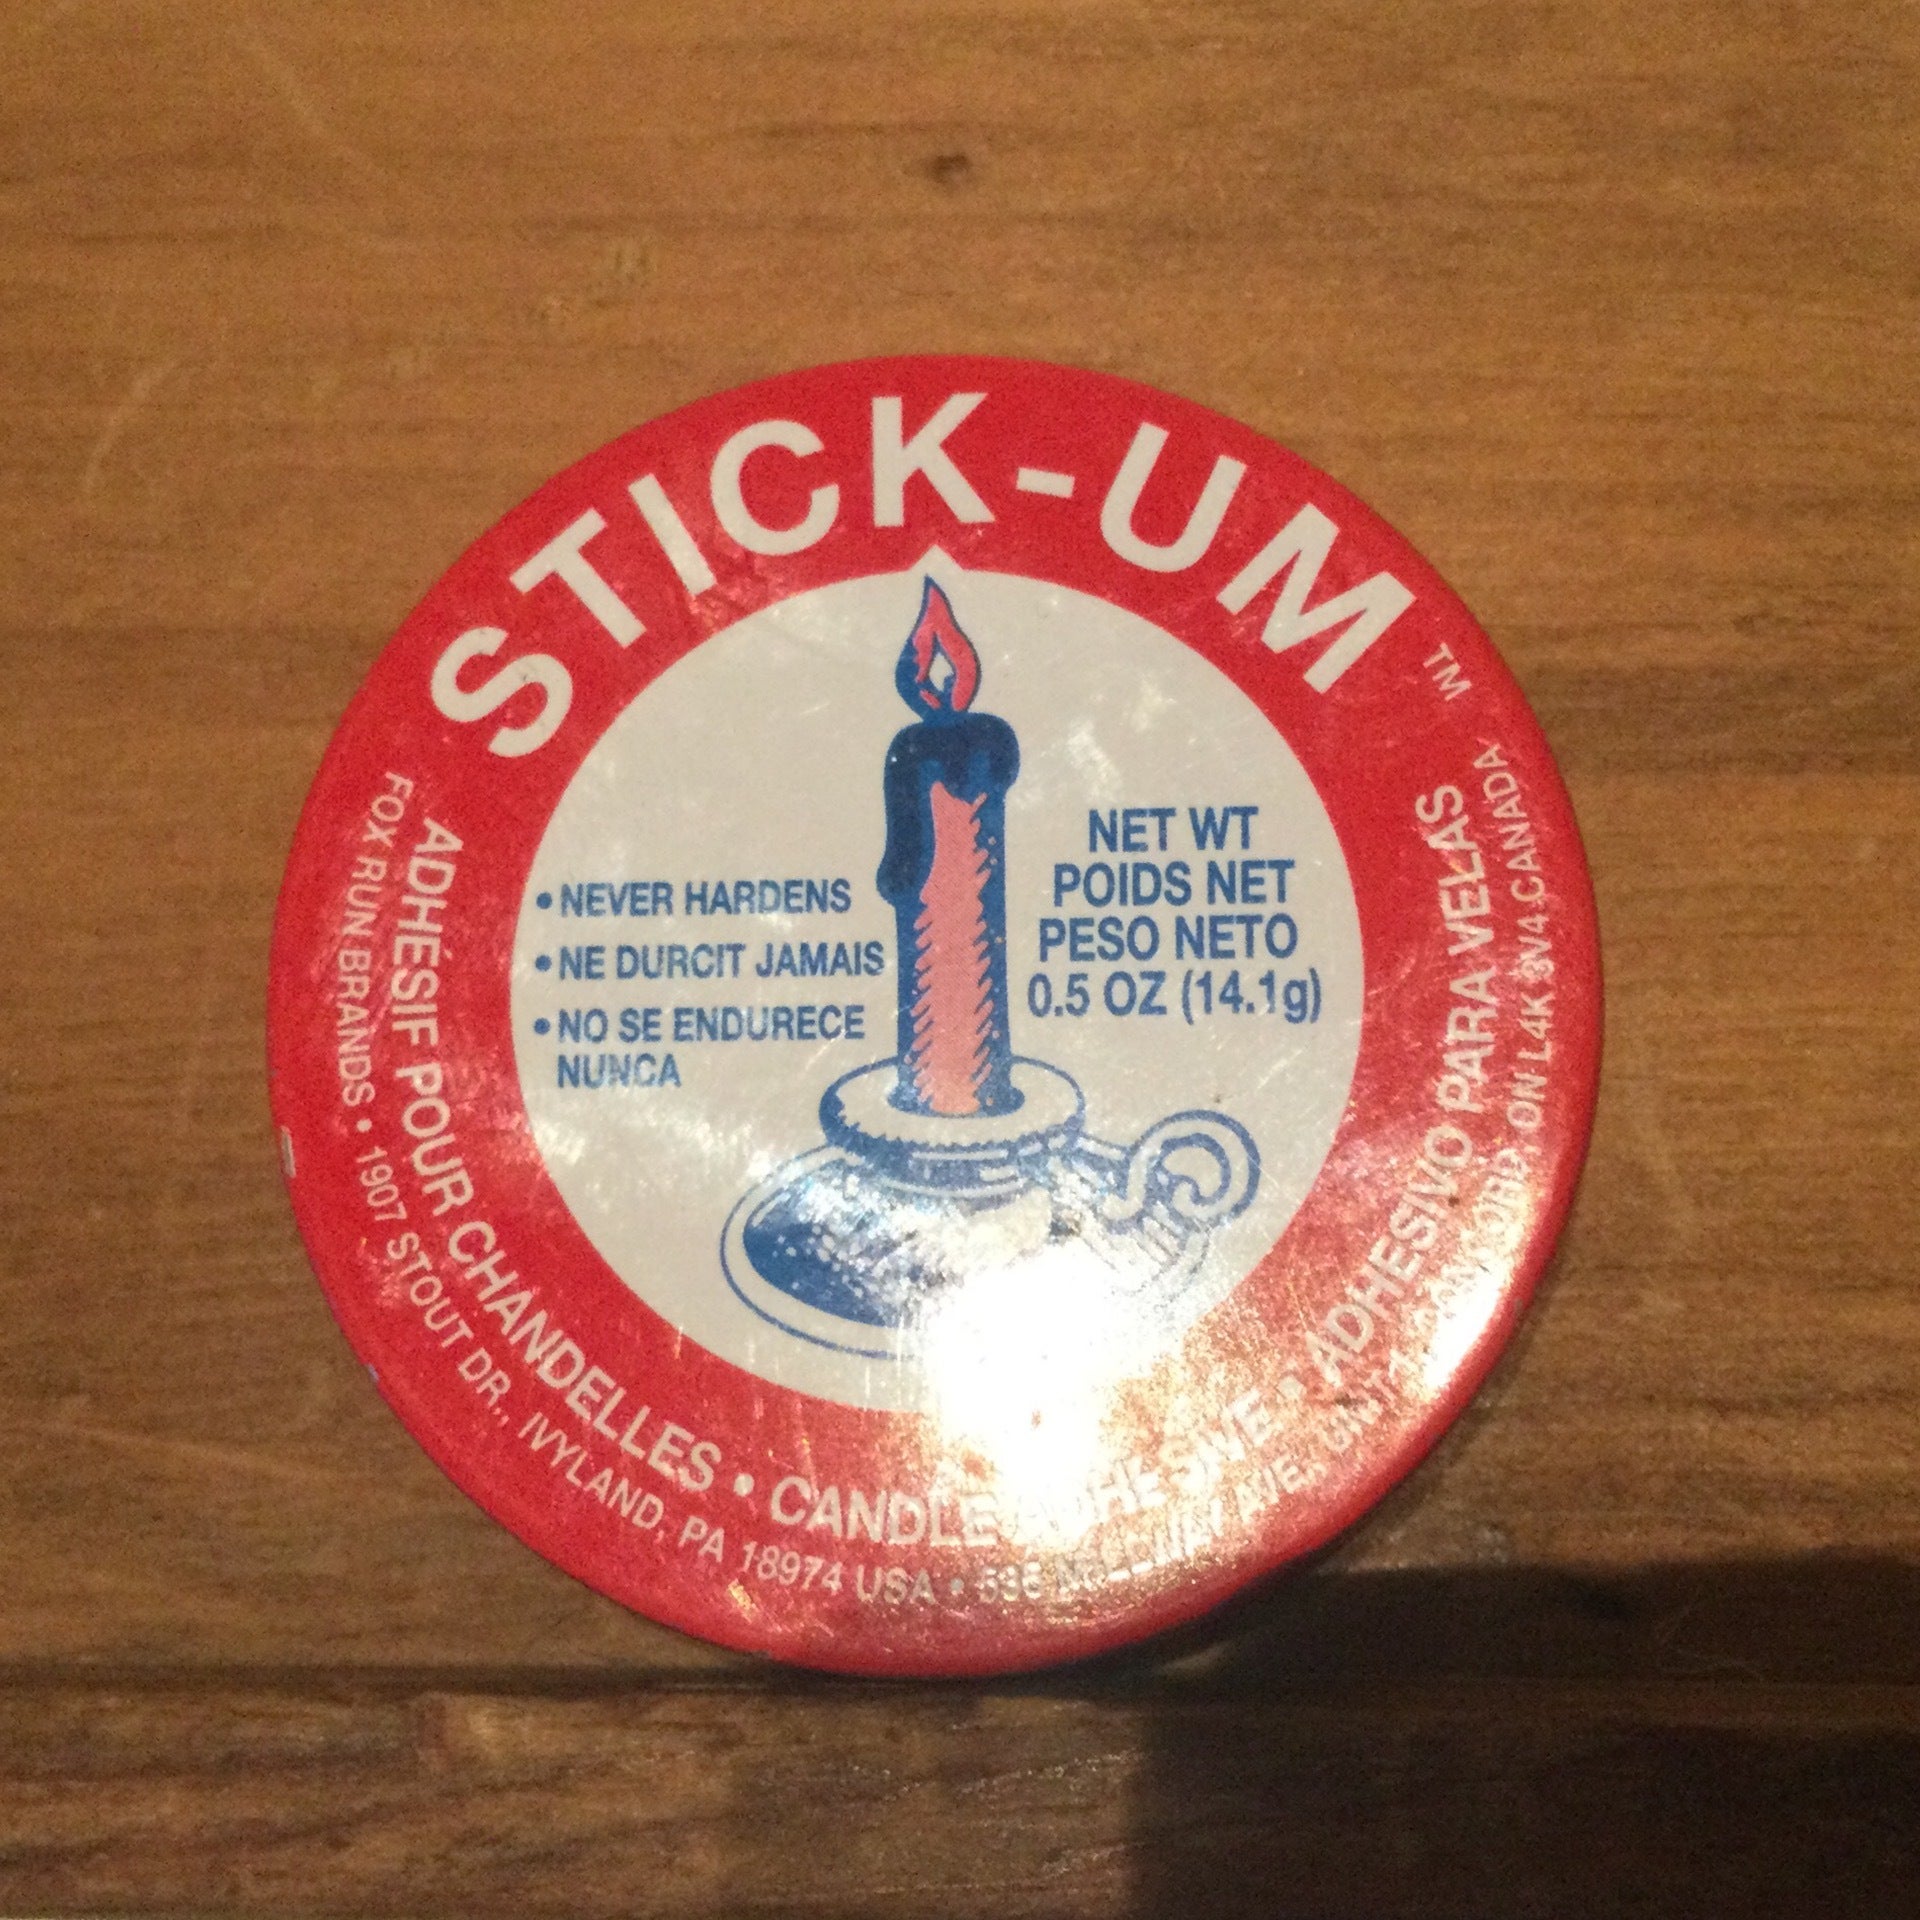 Stick-um Candle Adhesive Vintage Tin